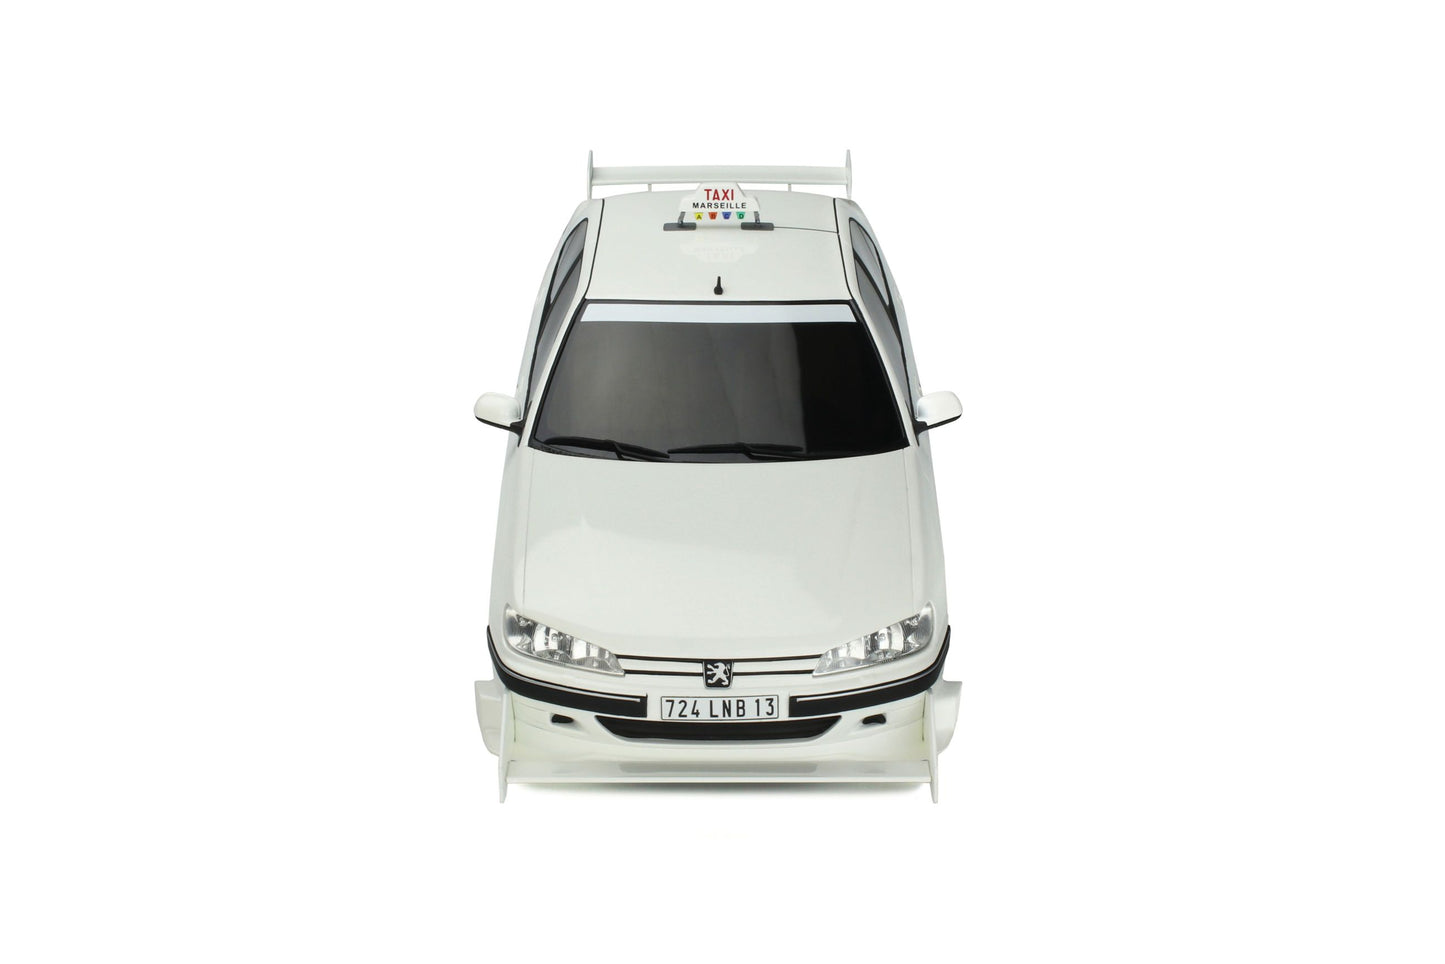 OttOmobile - Peugeot 406 "Taxi" (White) 1:12 Scale Model Car